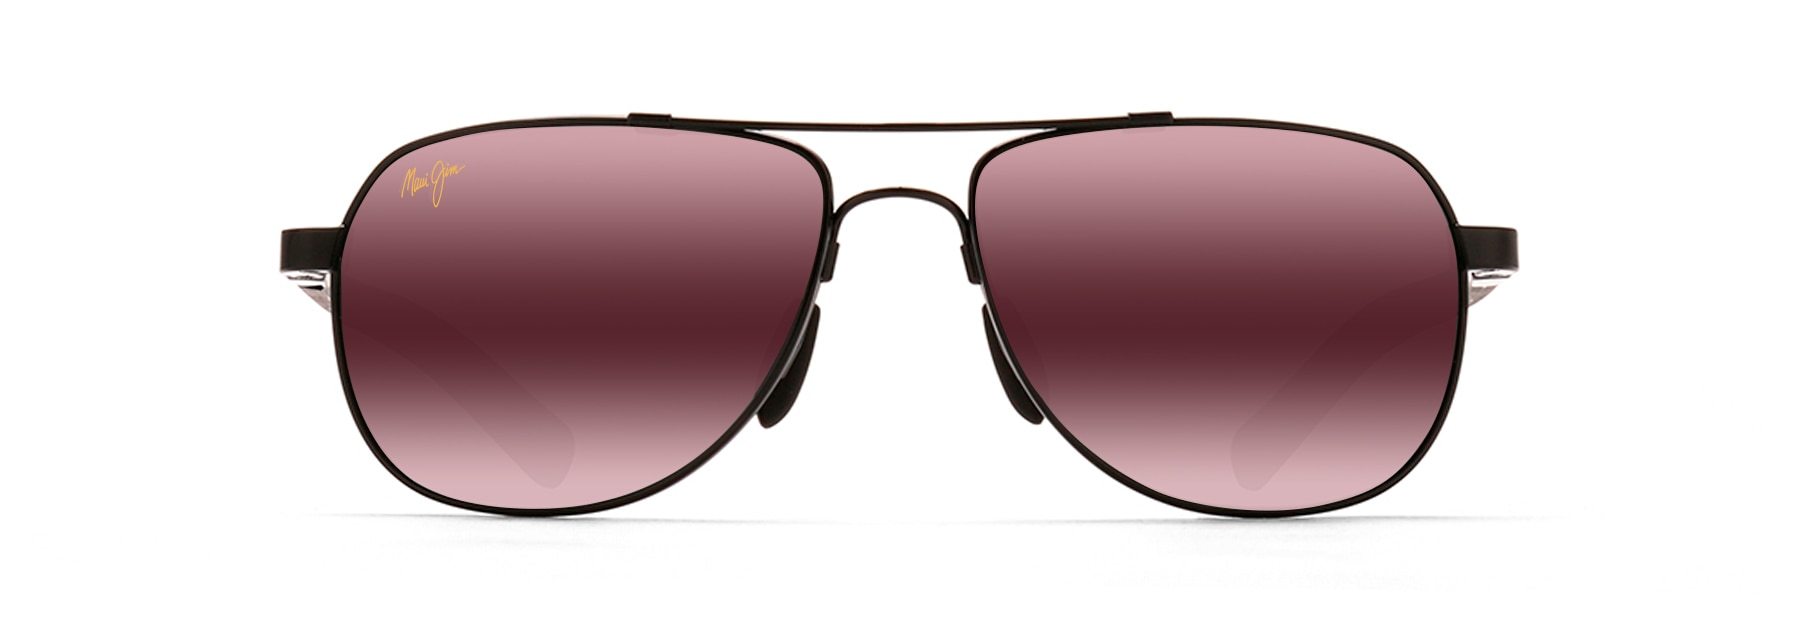 MyMaui Guardrails MM327-002 Sunglasses